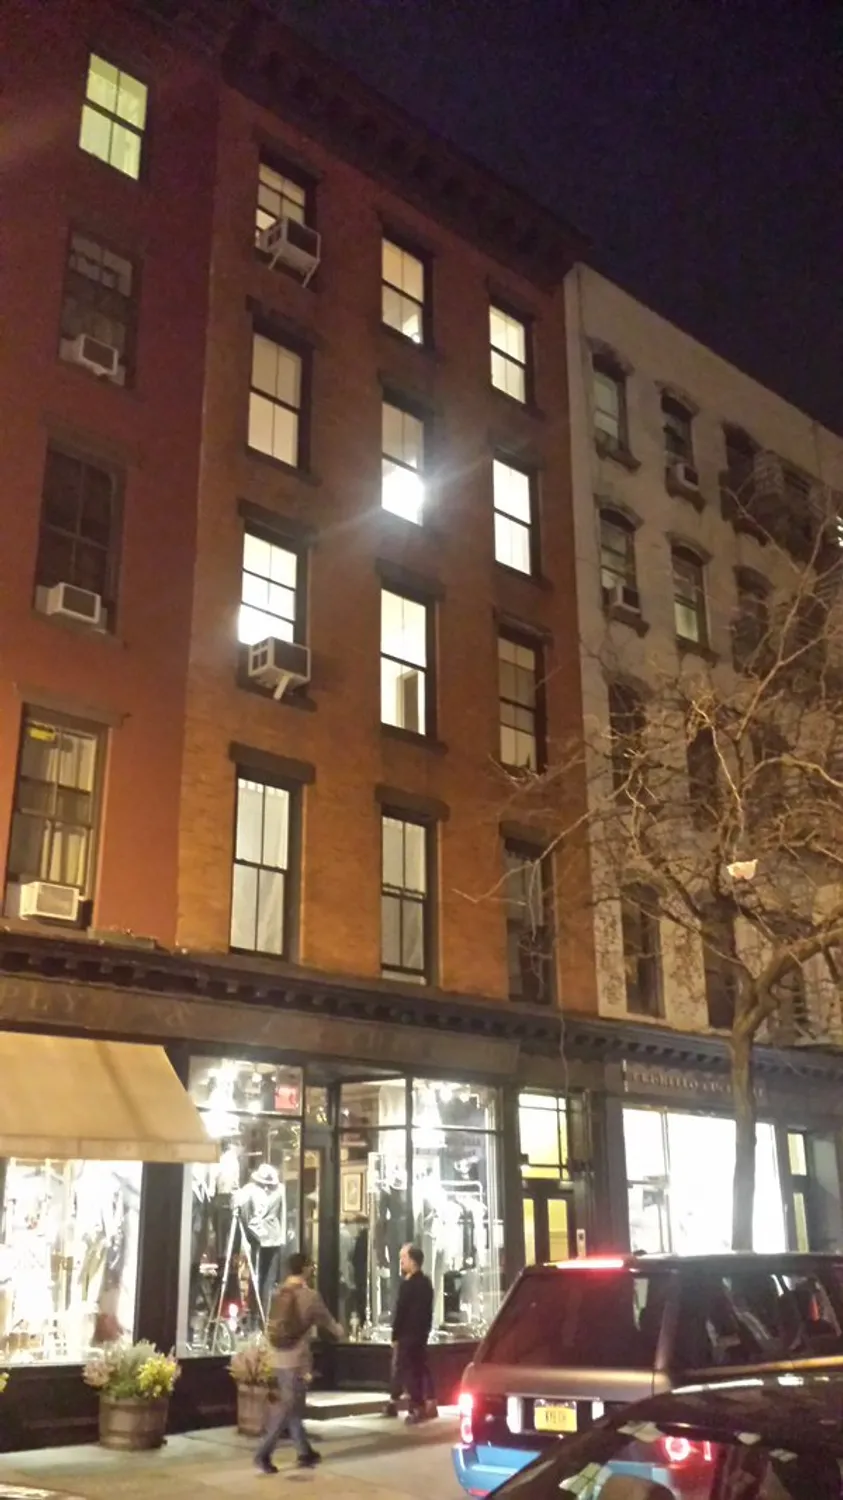 Nightime view of 381 Bleecker Street